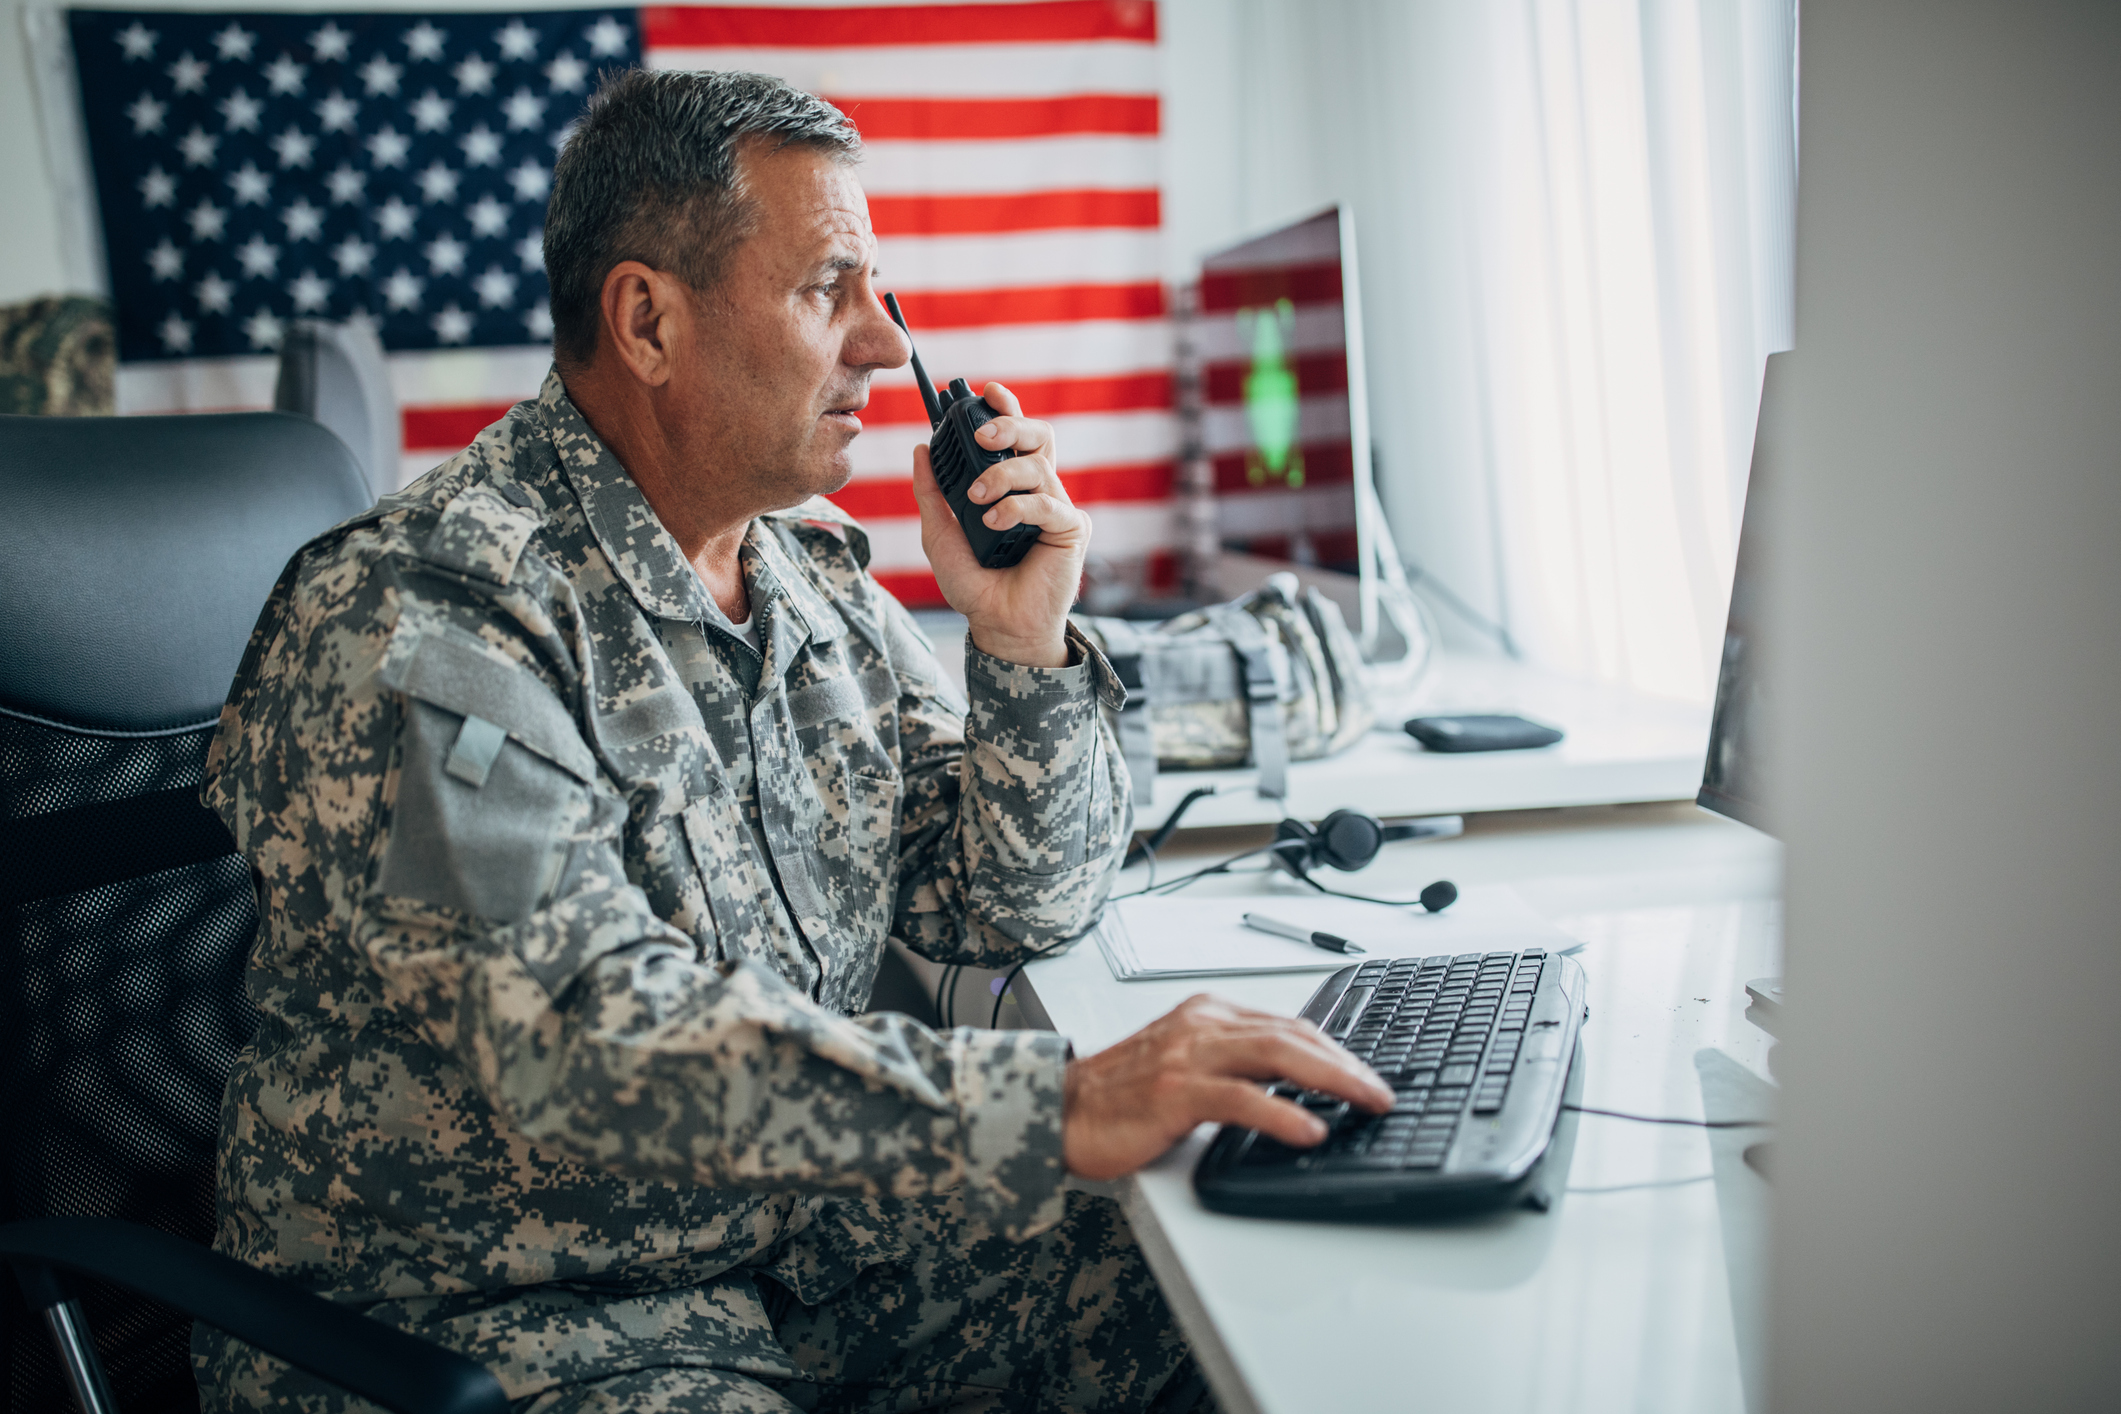 A military man talking on a walkie-talkie